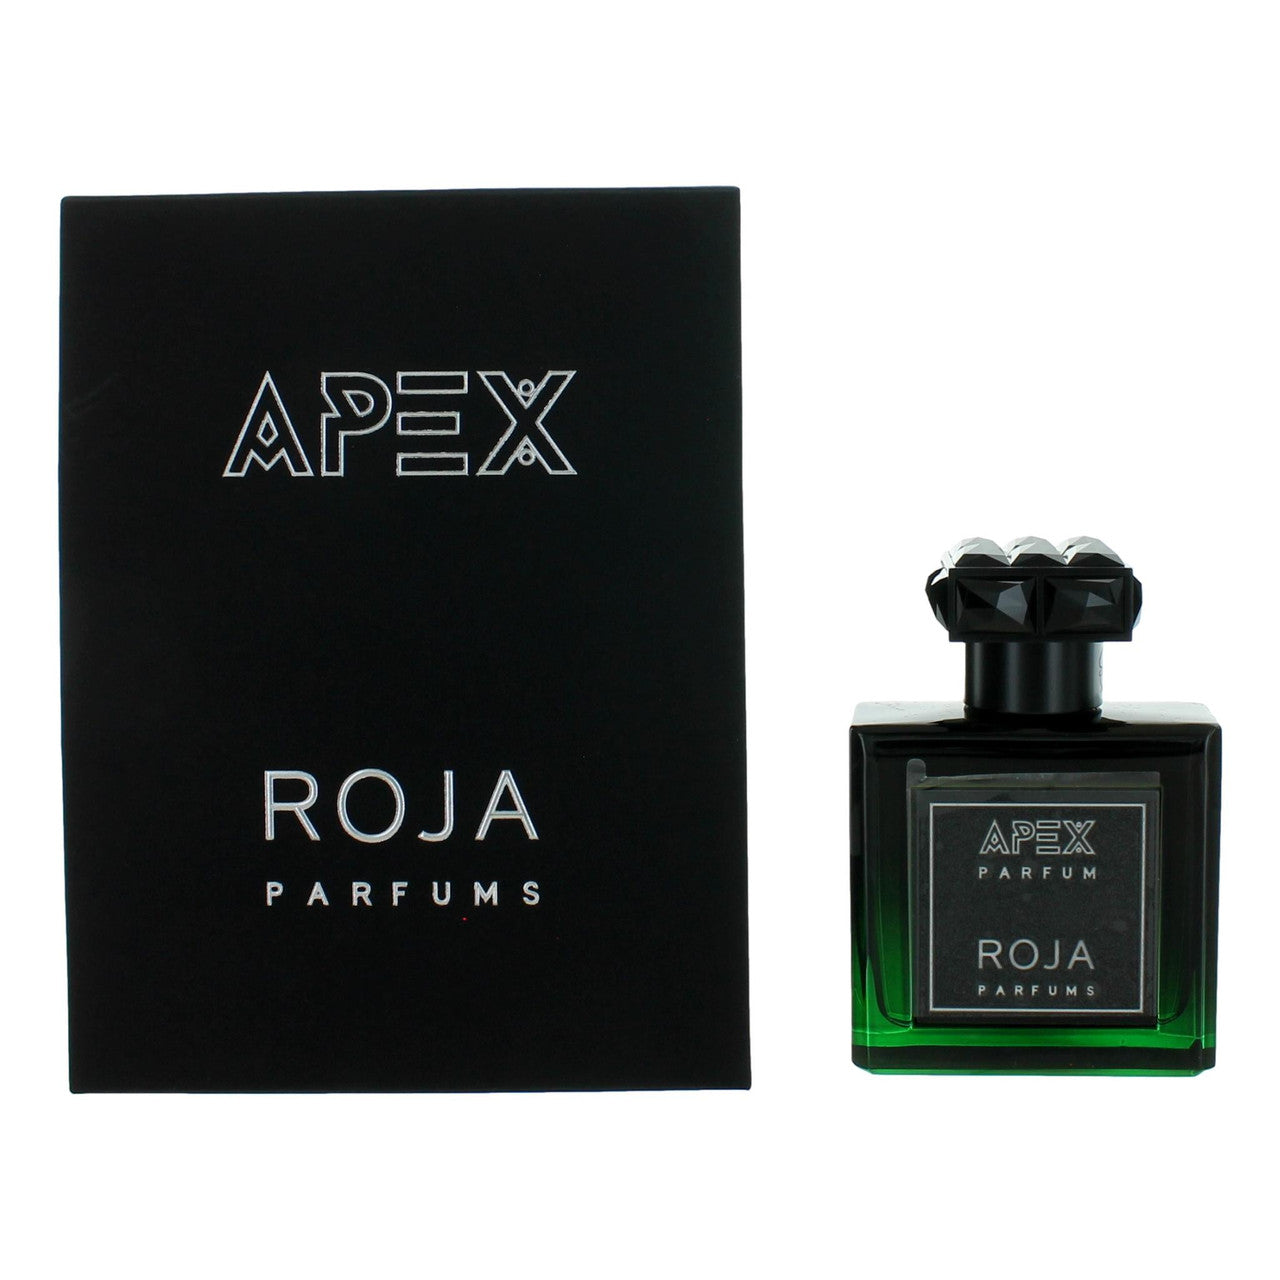 1.7 oz bottle of Apex Roja Parfums